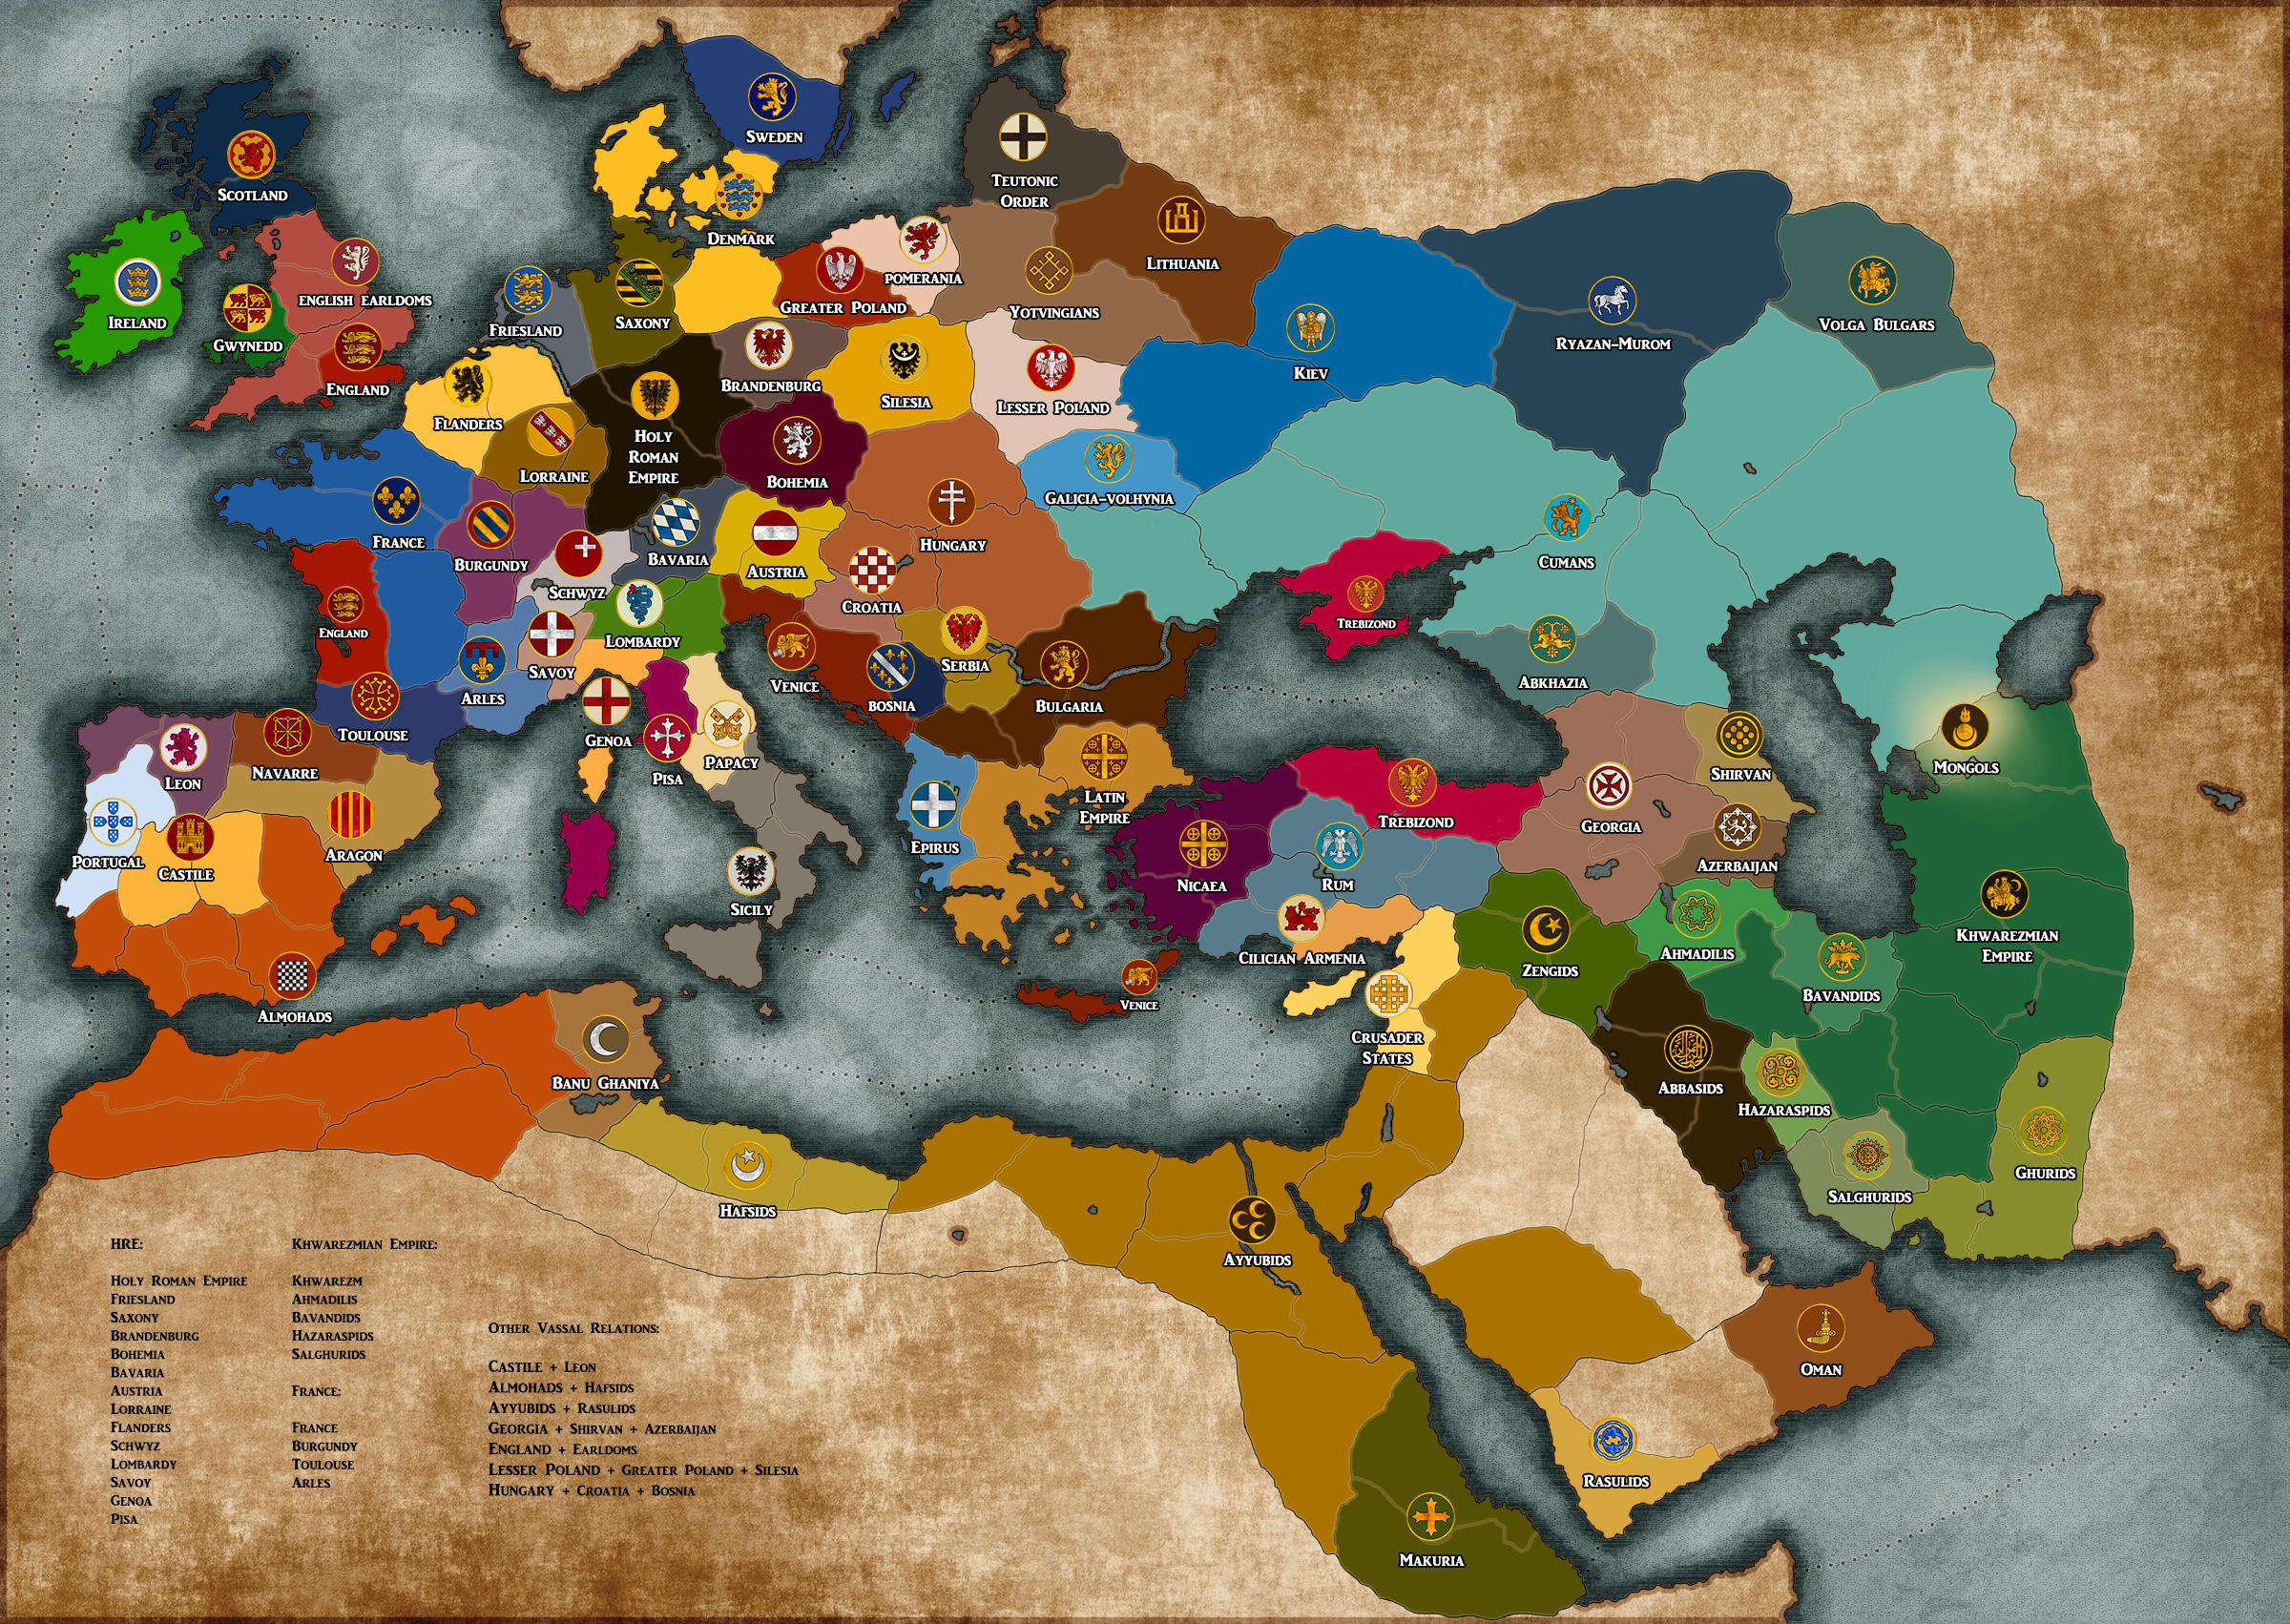 mod medieval kingdoms total war 1212 ad